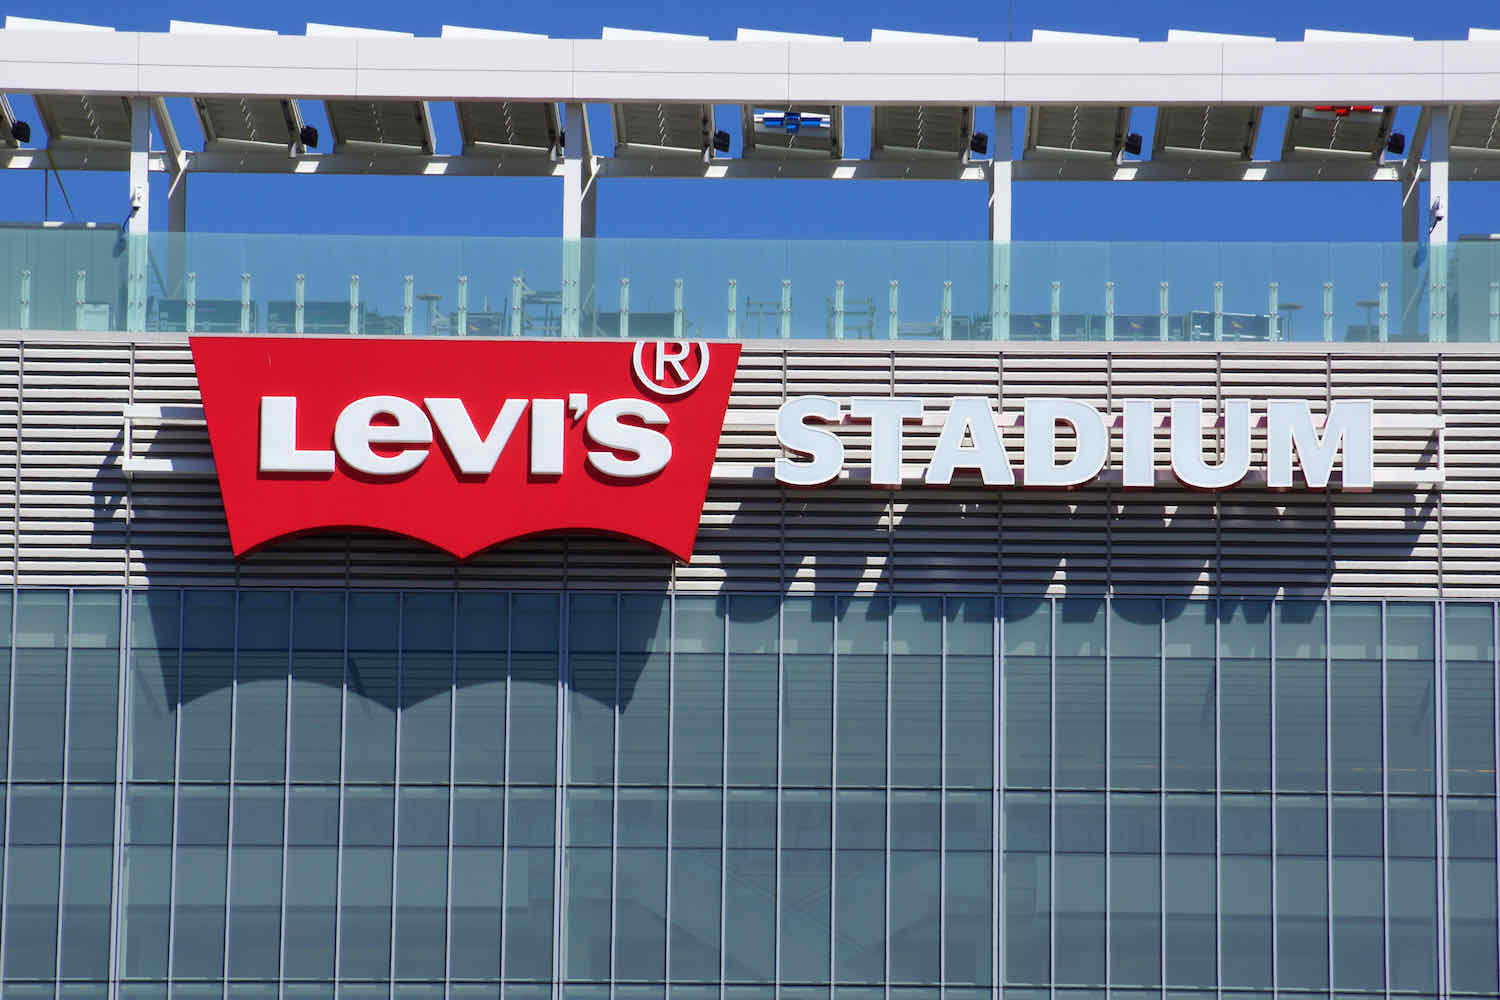 How to Get to Levi's Stadium - CrawlSF